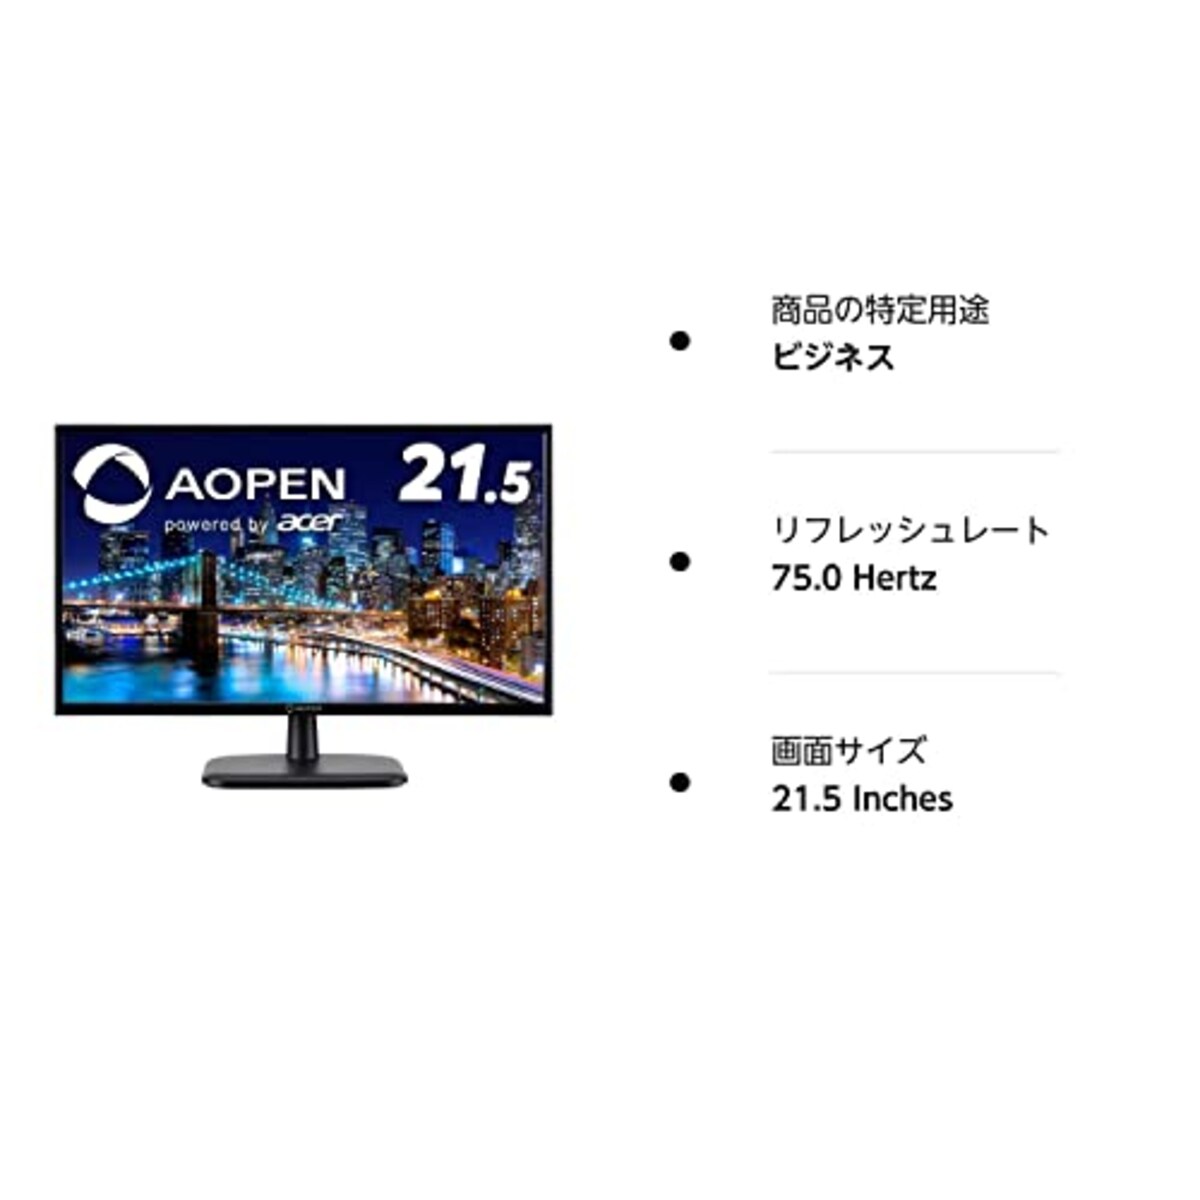  AOPEN モニター 22CV1Qbi 21.5インチ 75Hz 5ms VA フルHD HDMI スピーカー無し VESA ディスプレイ 3年保証 広い視野角178°画像8 